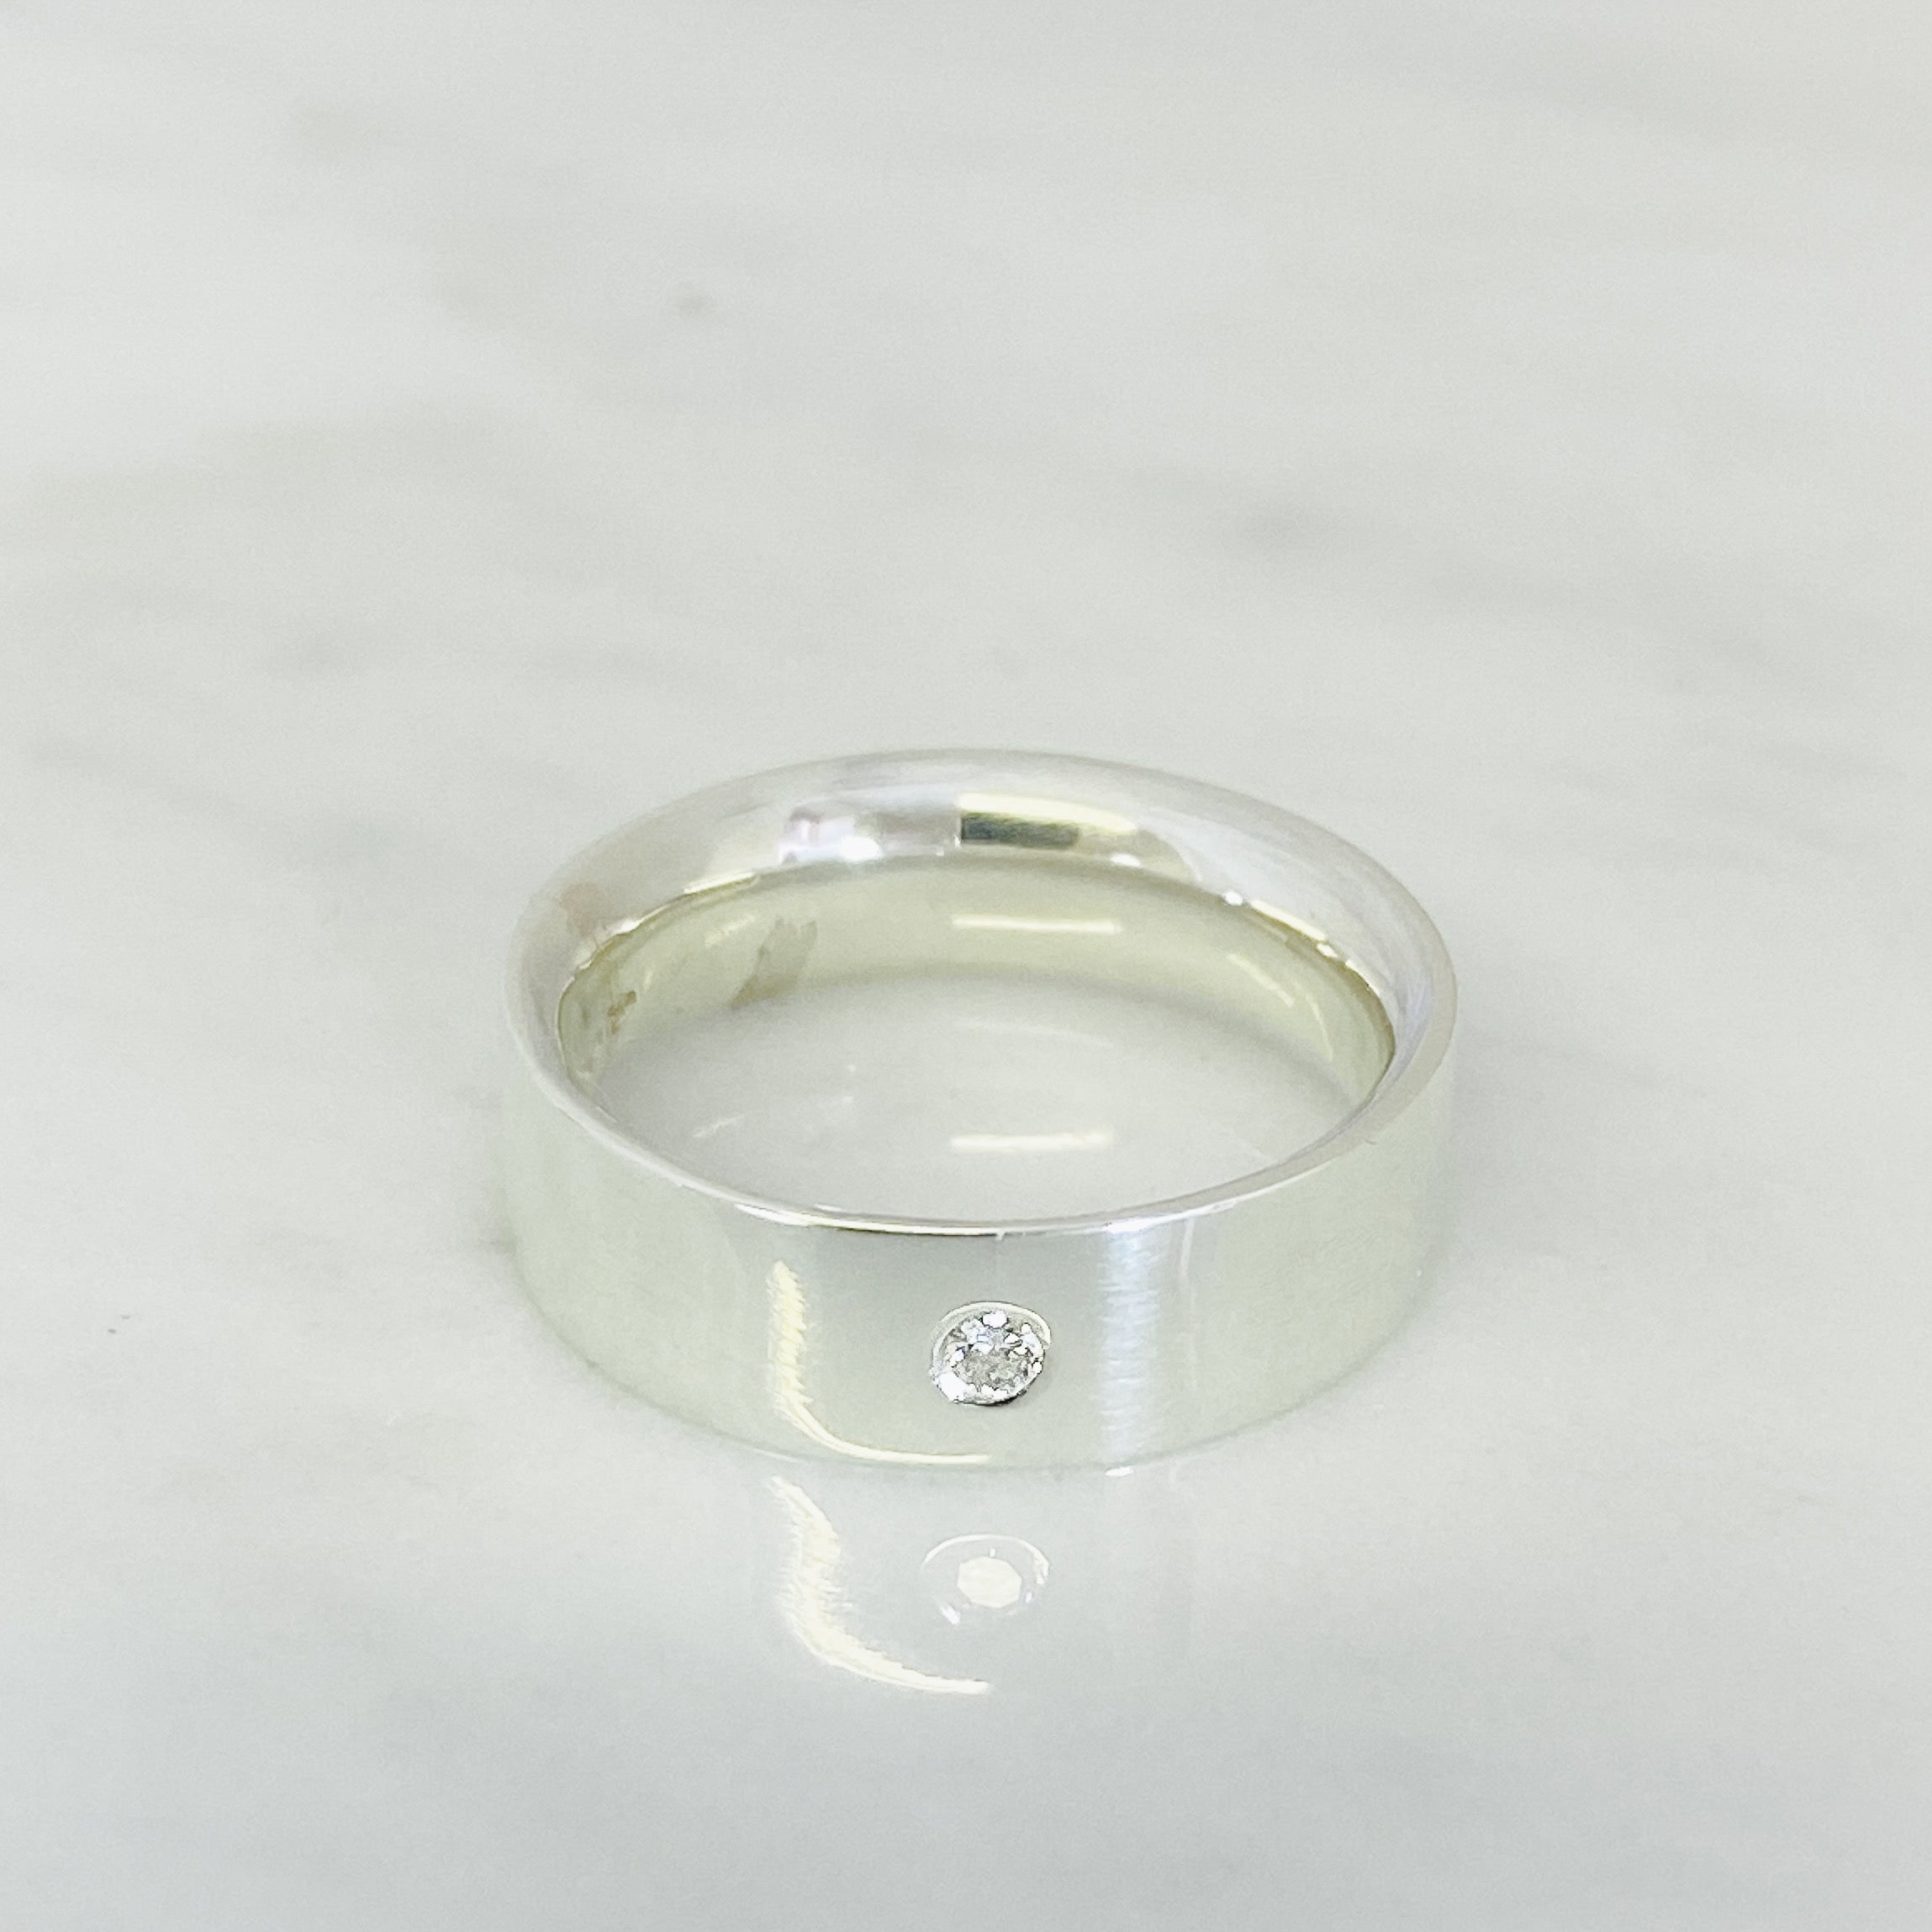 White Gold and Diamond Classic Wedding Ring